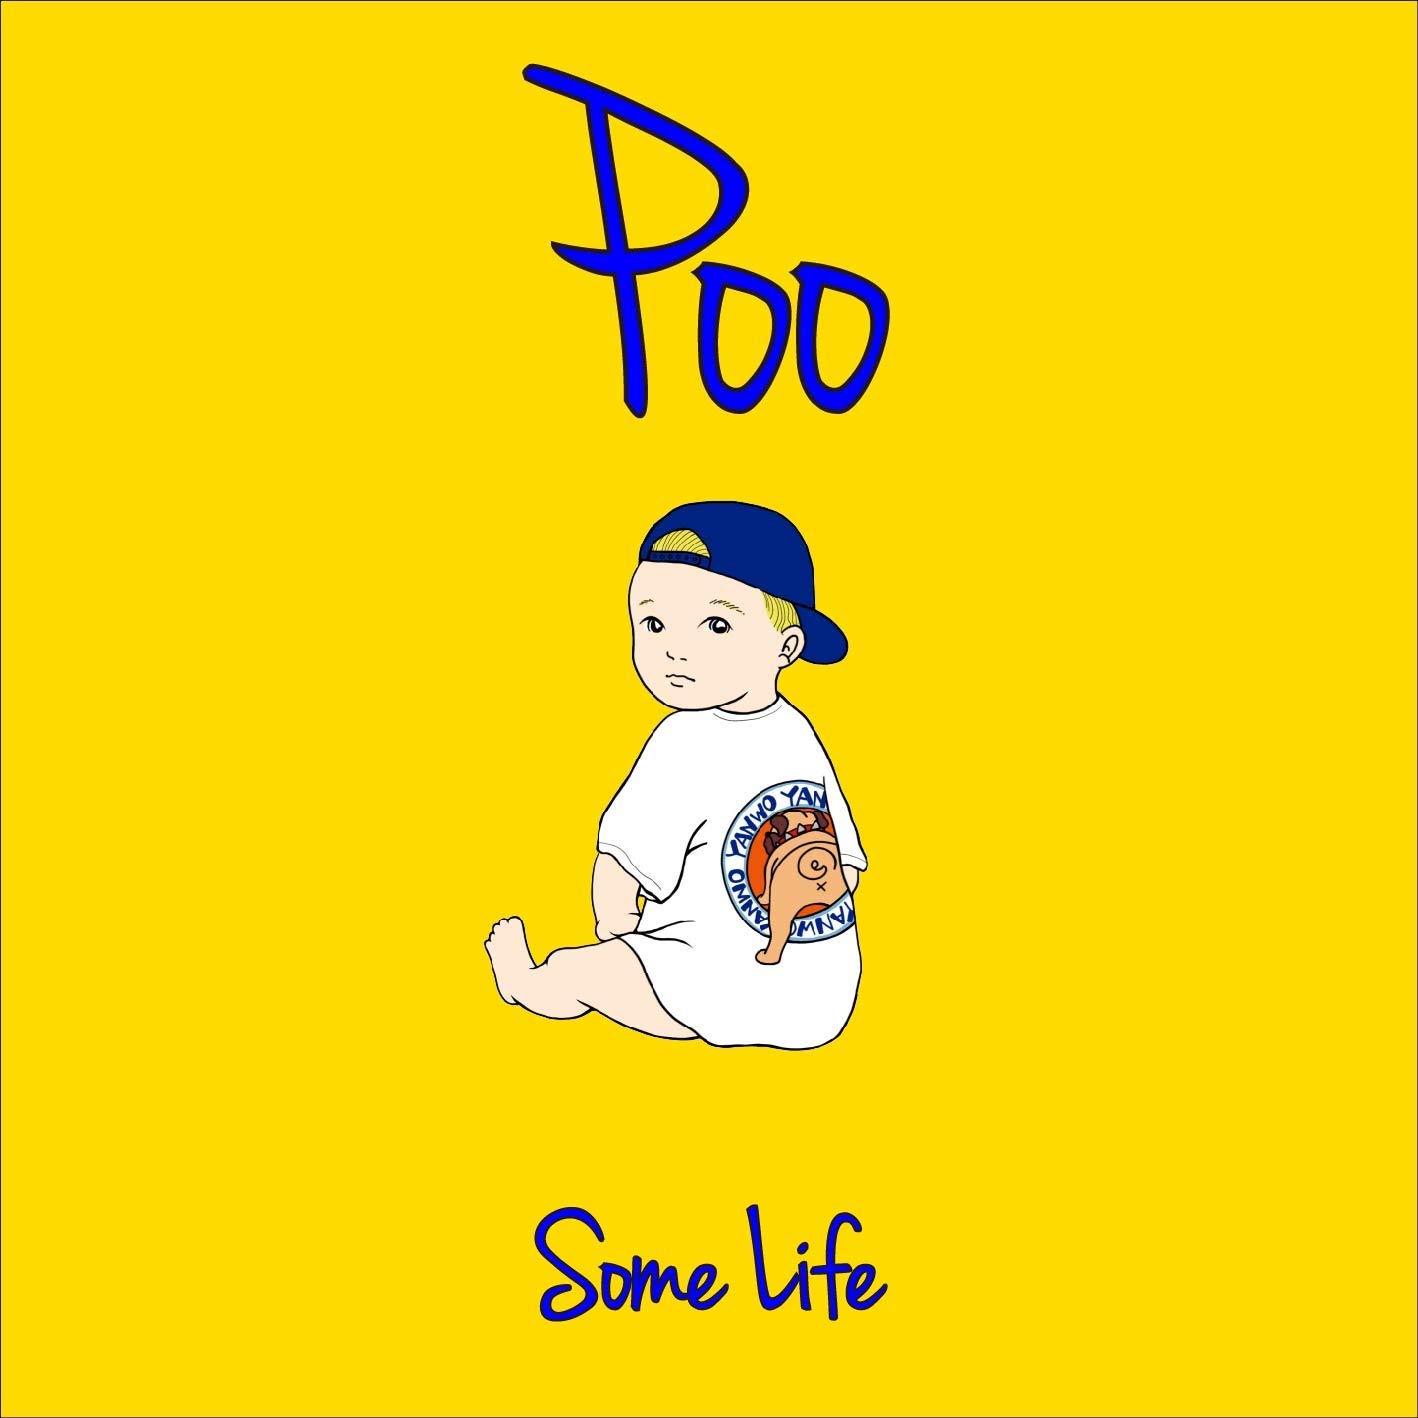 Some Life / Poo